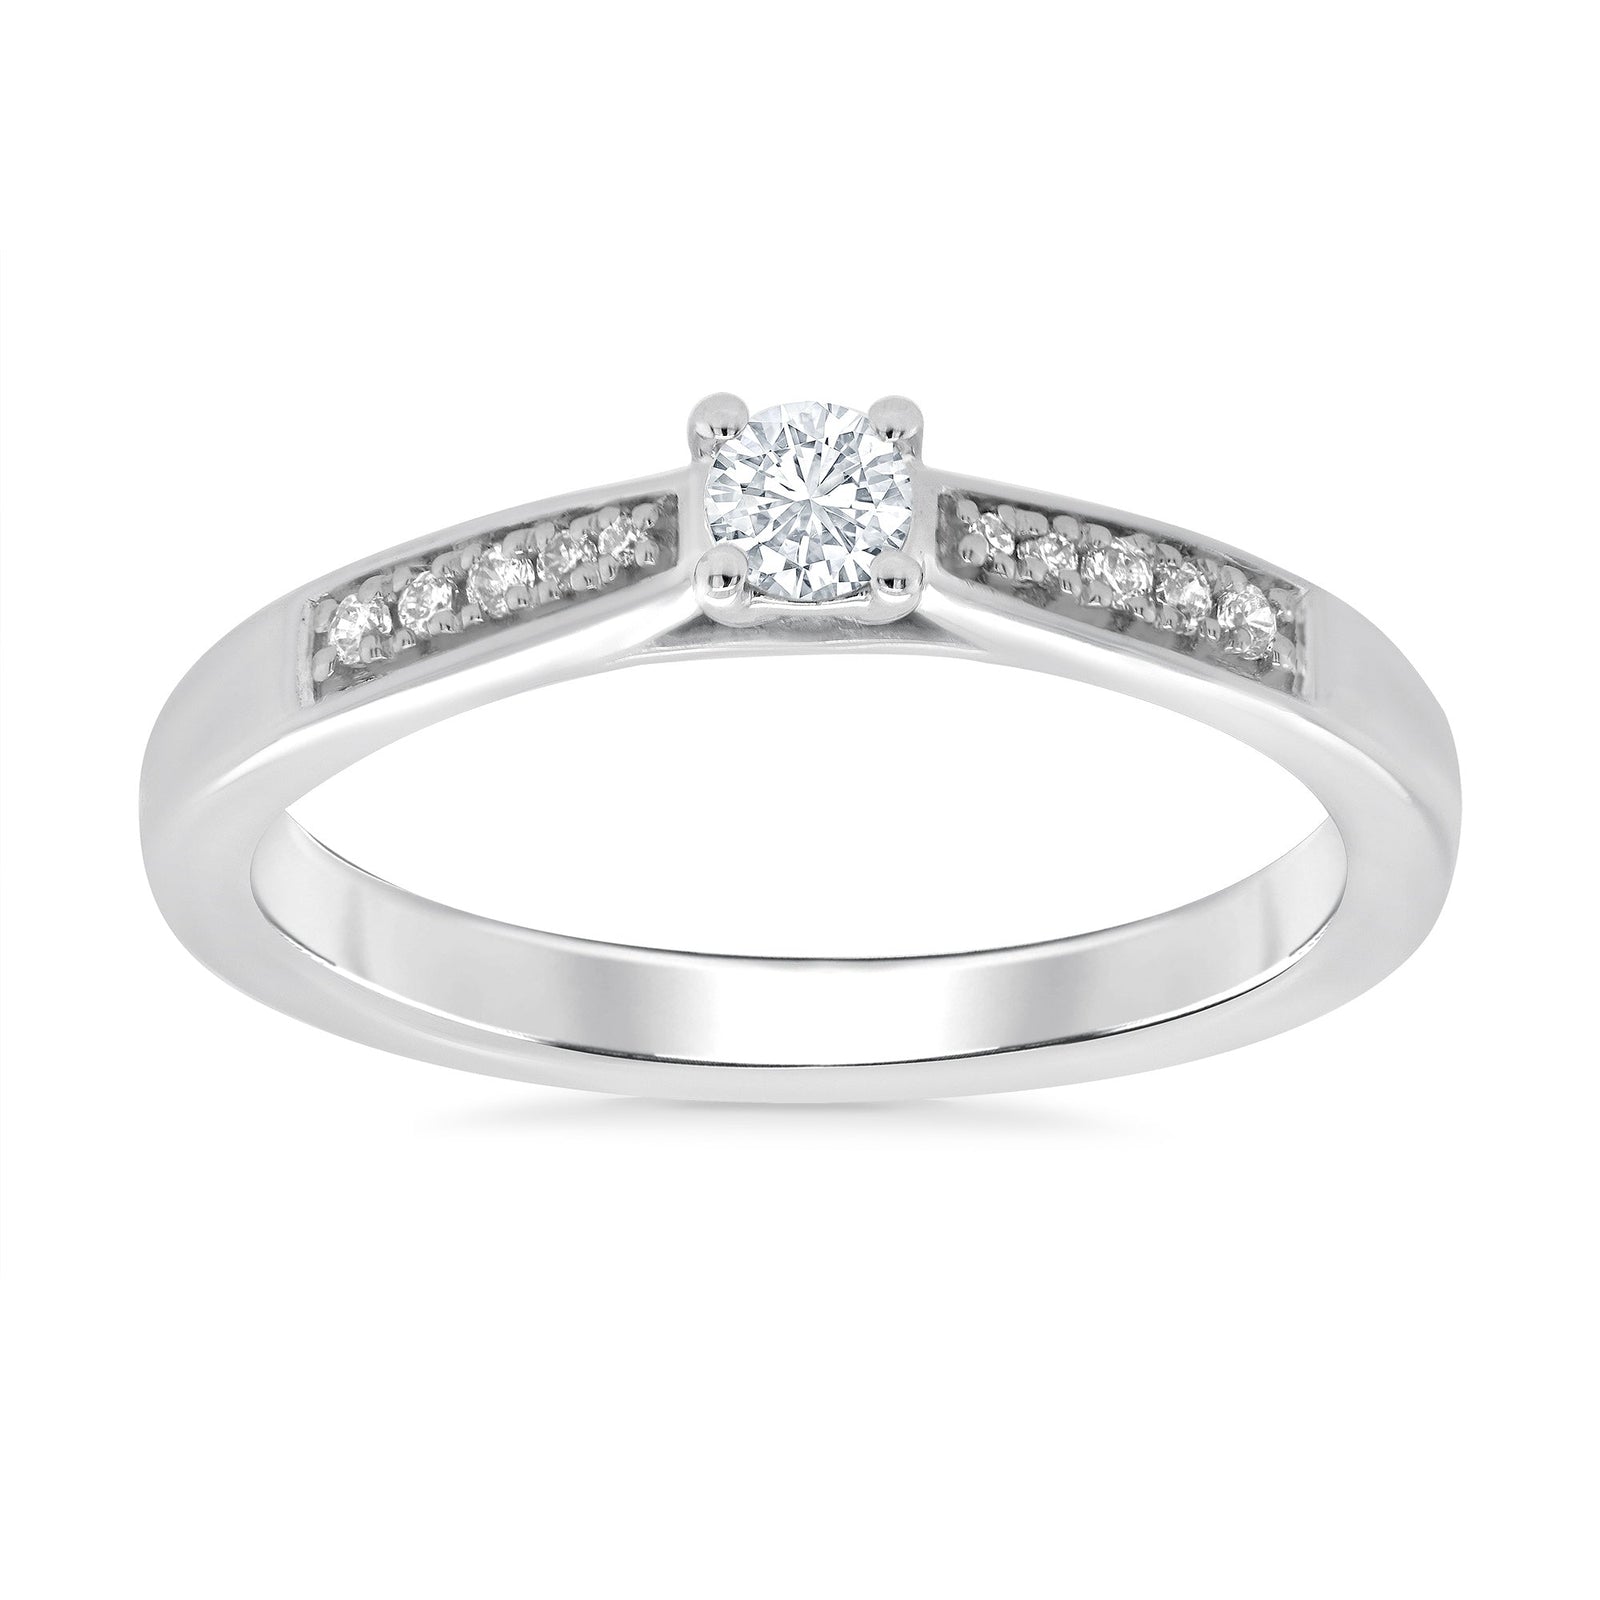 9ct white gold single stone diamond ring with diamond set shoulders 0.16ct